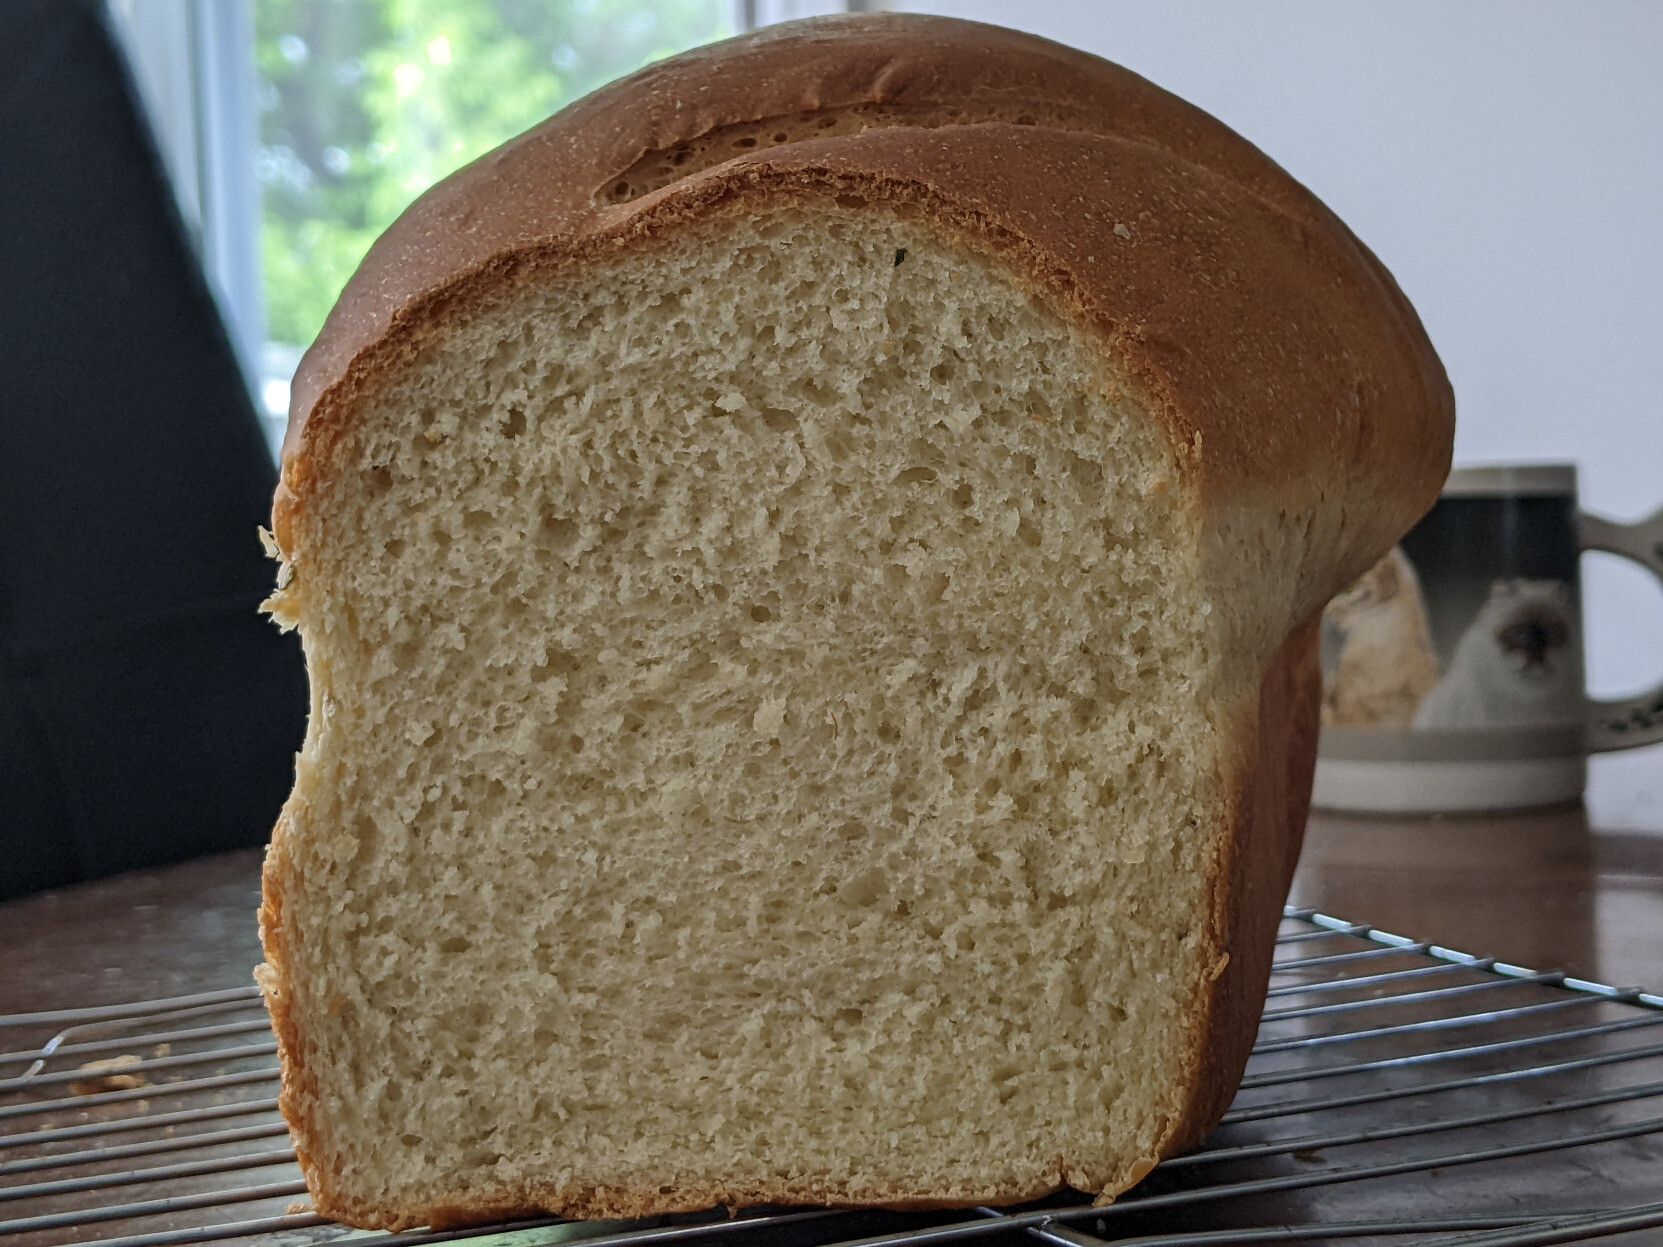 Homemade bread, sliced